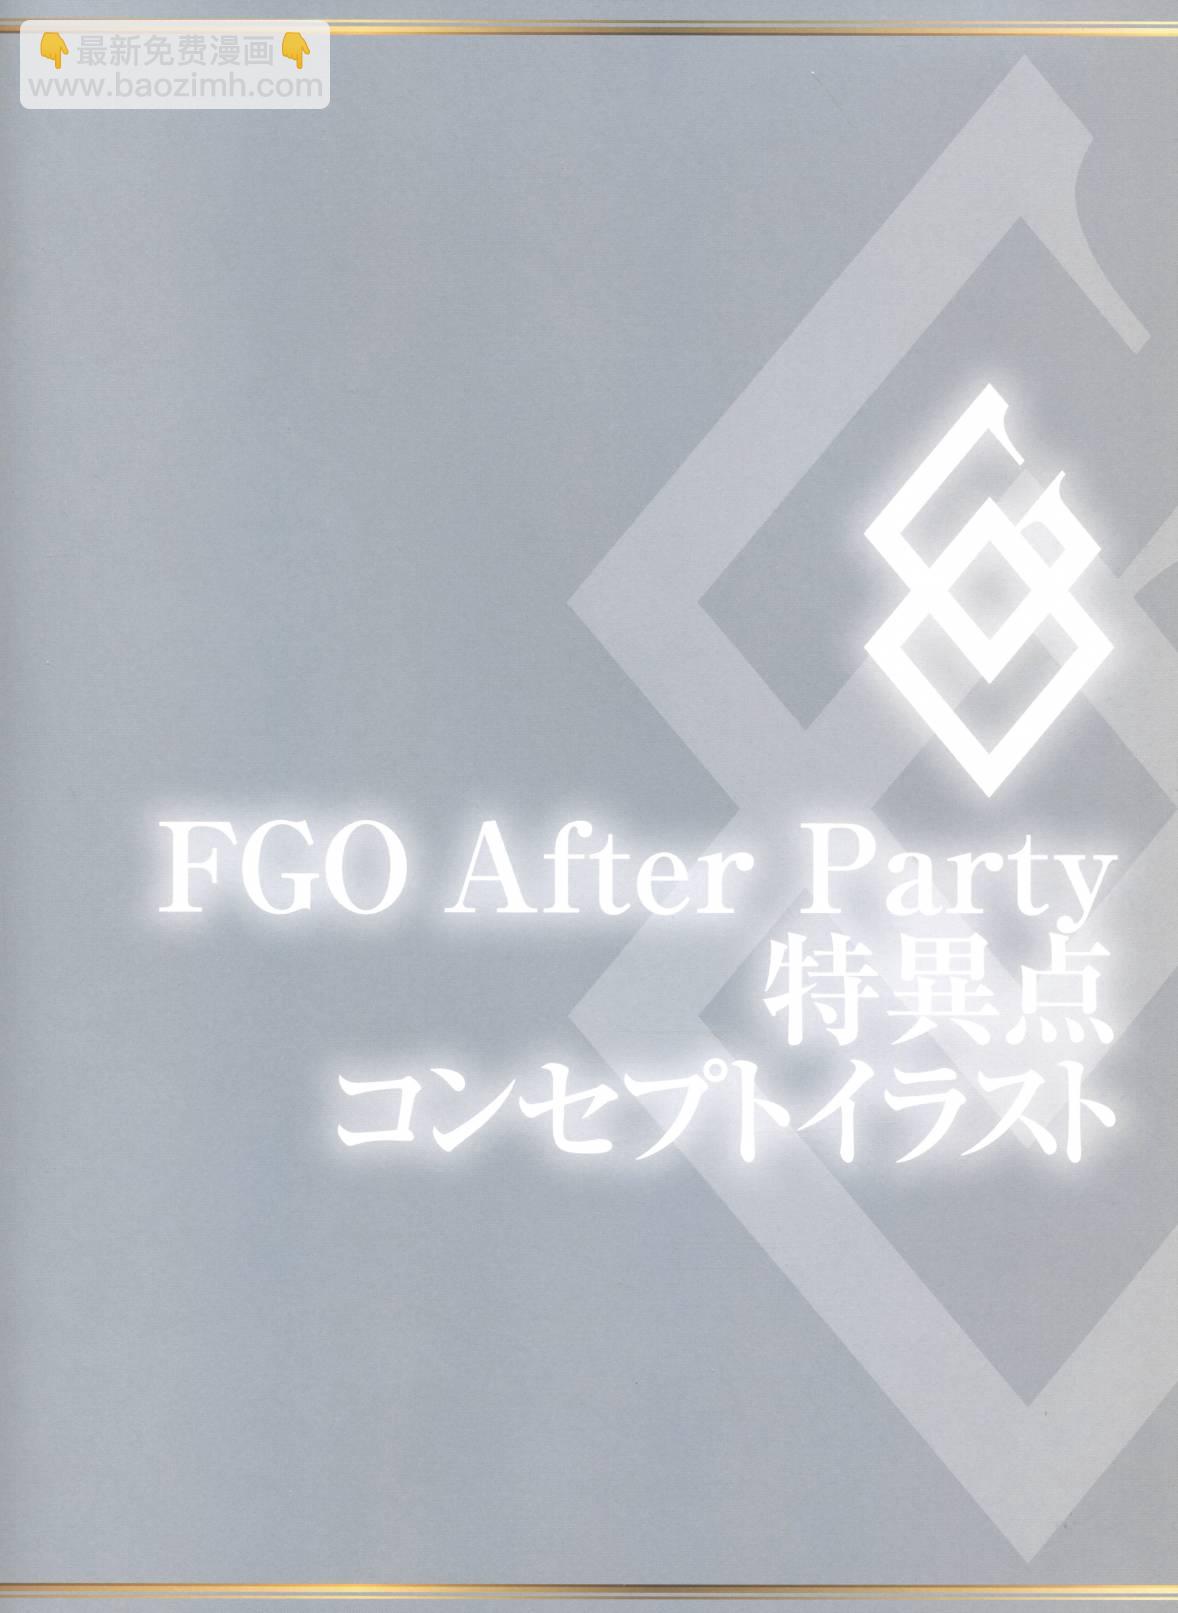 FGO週年紀念活動場刊合集 - fgo2th(2/2) - 2